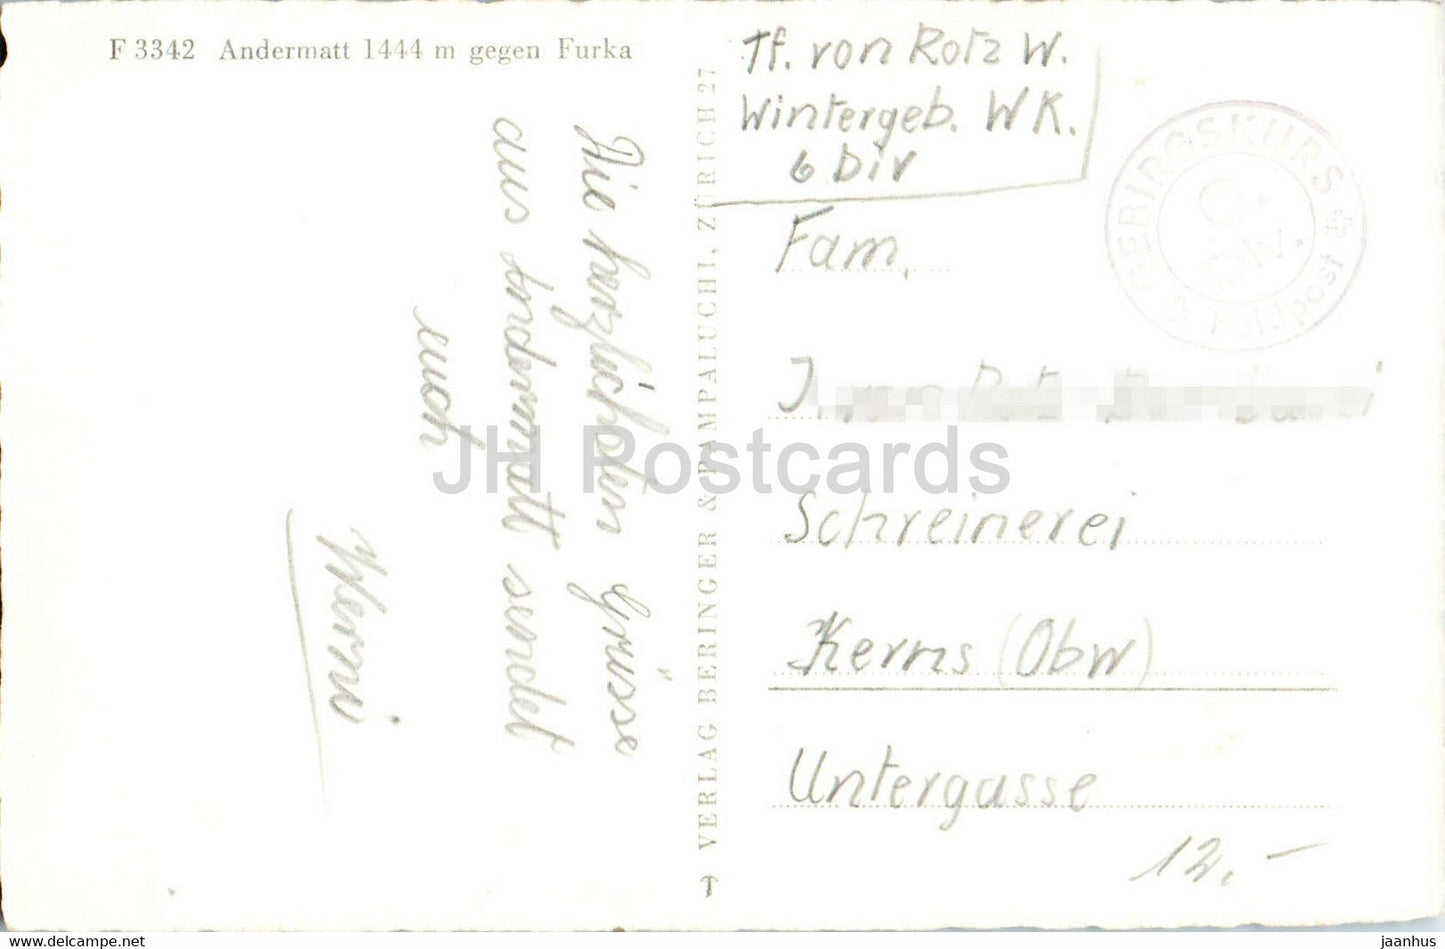 Andermatt 1444 m gegen Furka - F3342 - Feldpost - Militärpost - alte Postkarte - Schweiz - gebraucht